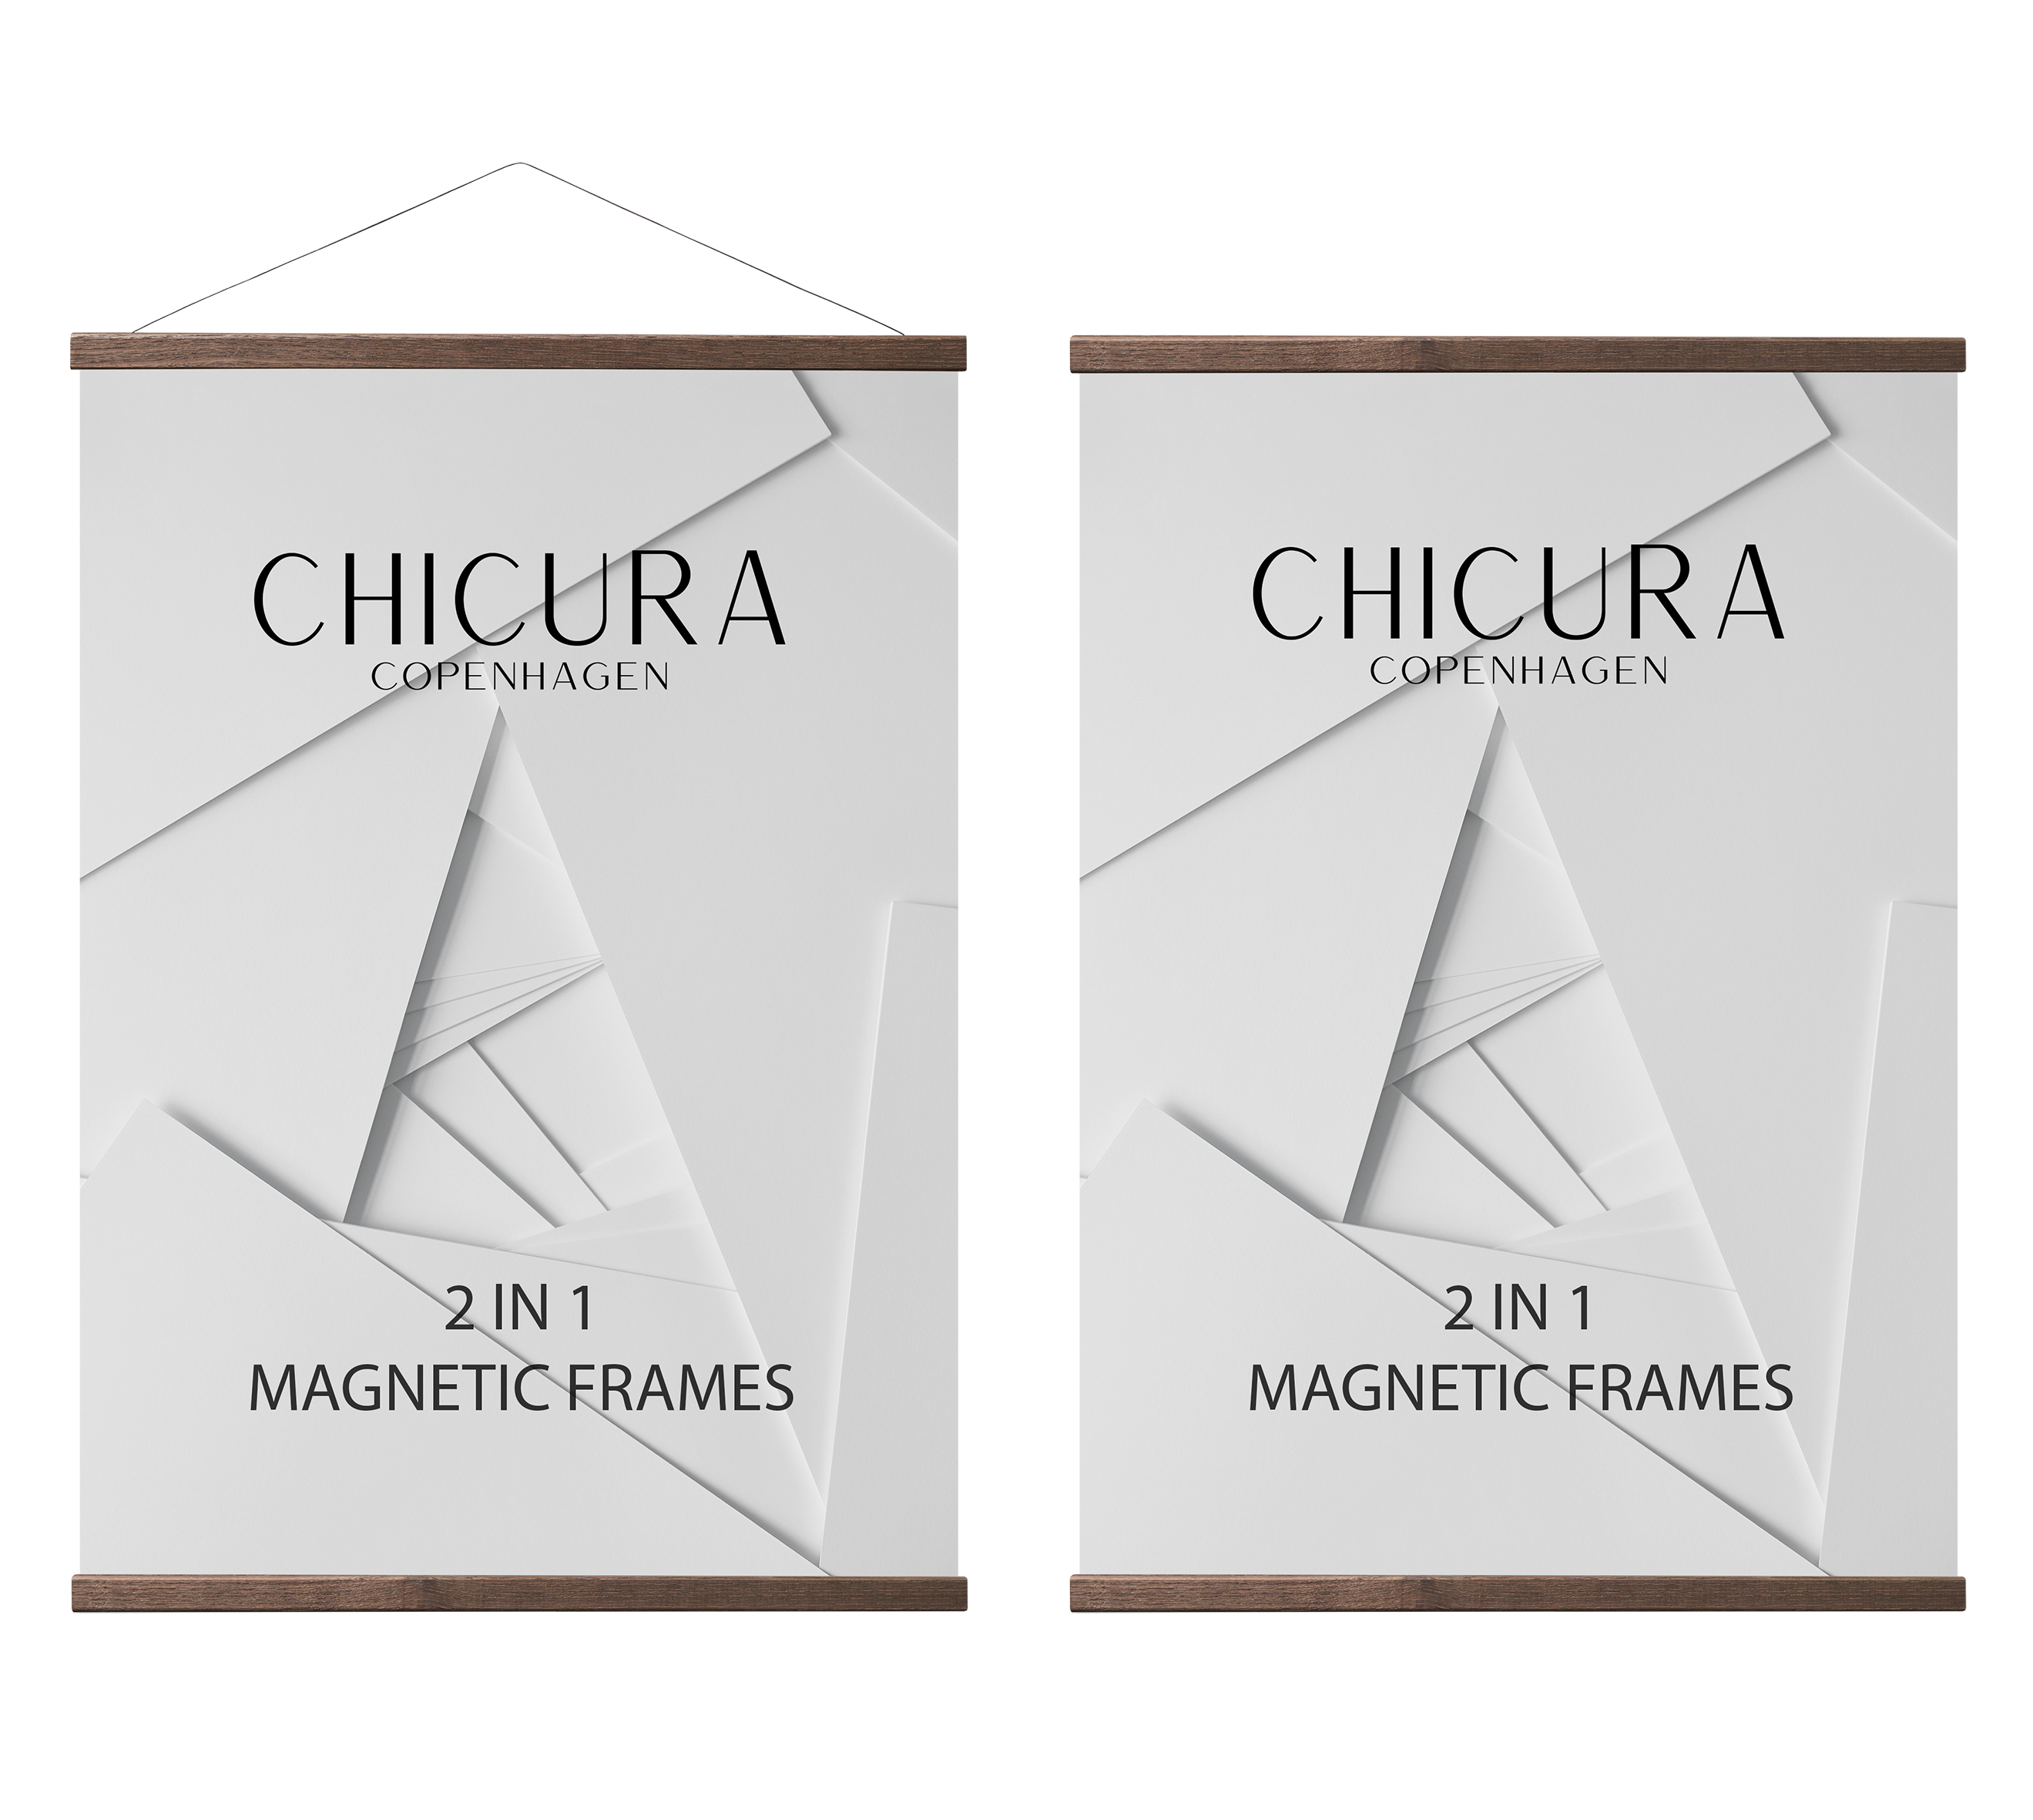 2 in 1 Magnetic Frame - 101 cm - Brown - ChiCura Copenhagen DK -